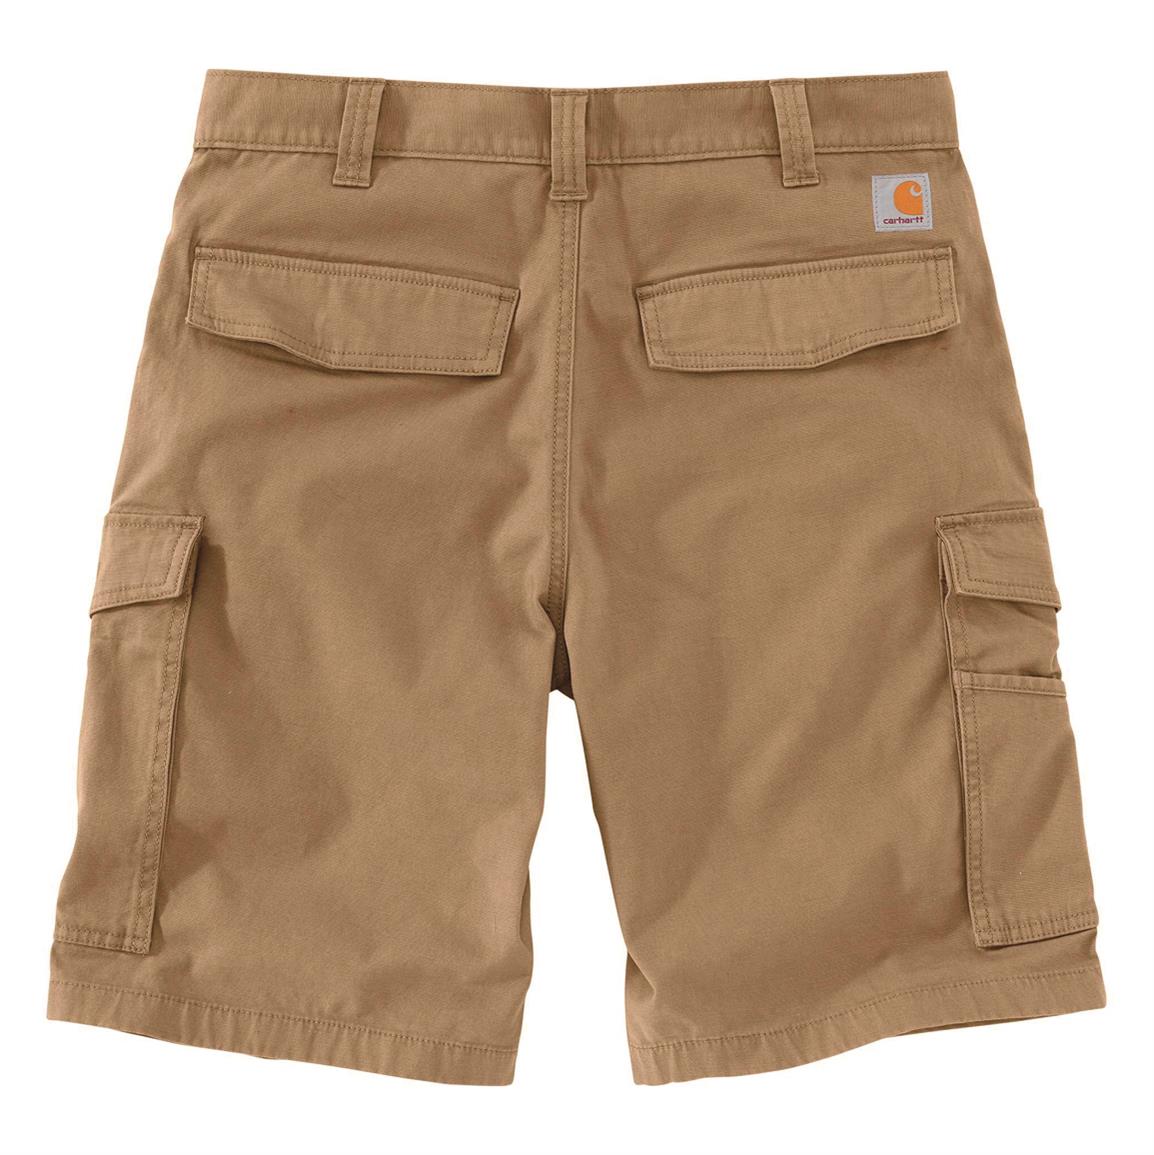 Carhartt Men's Rugged Flex Rigby Cargo Shorts - 708148, Shorts at ...